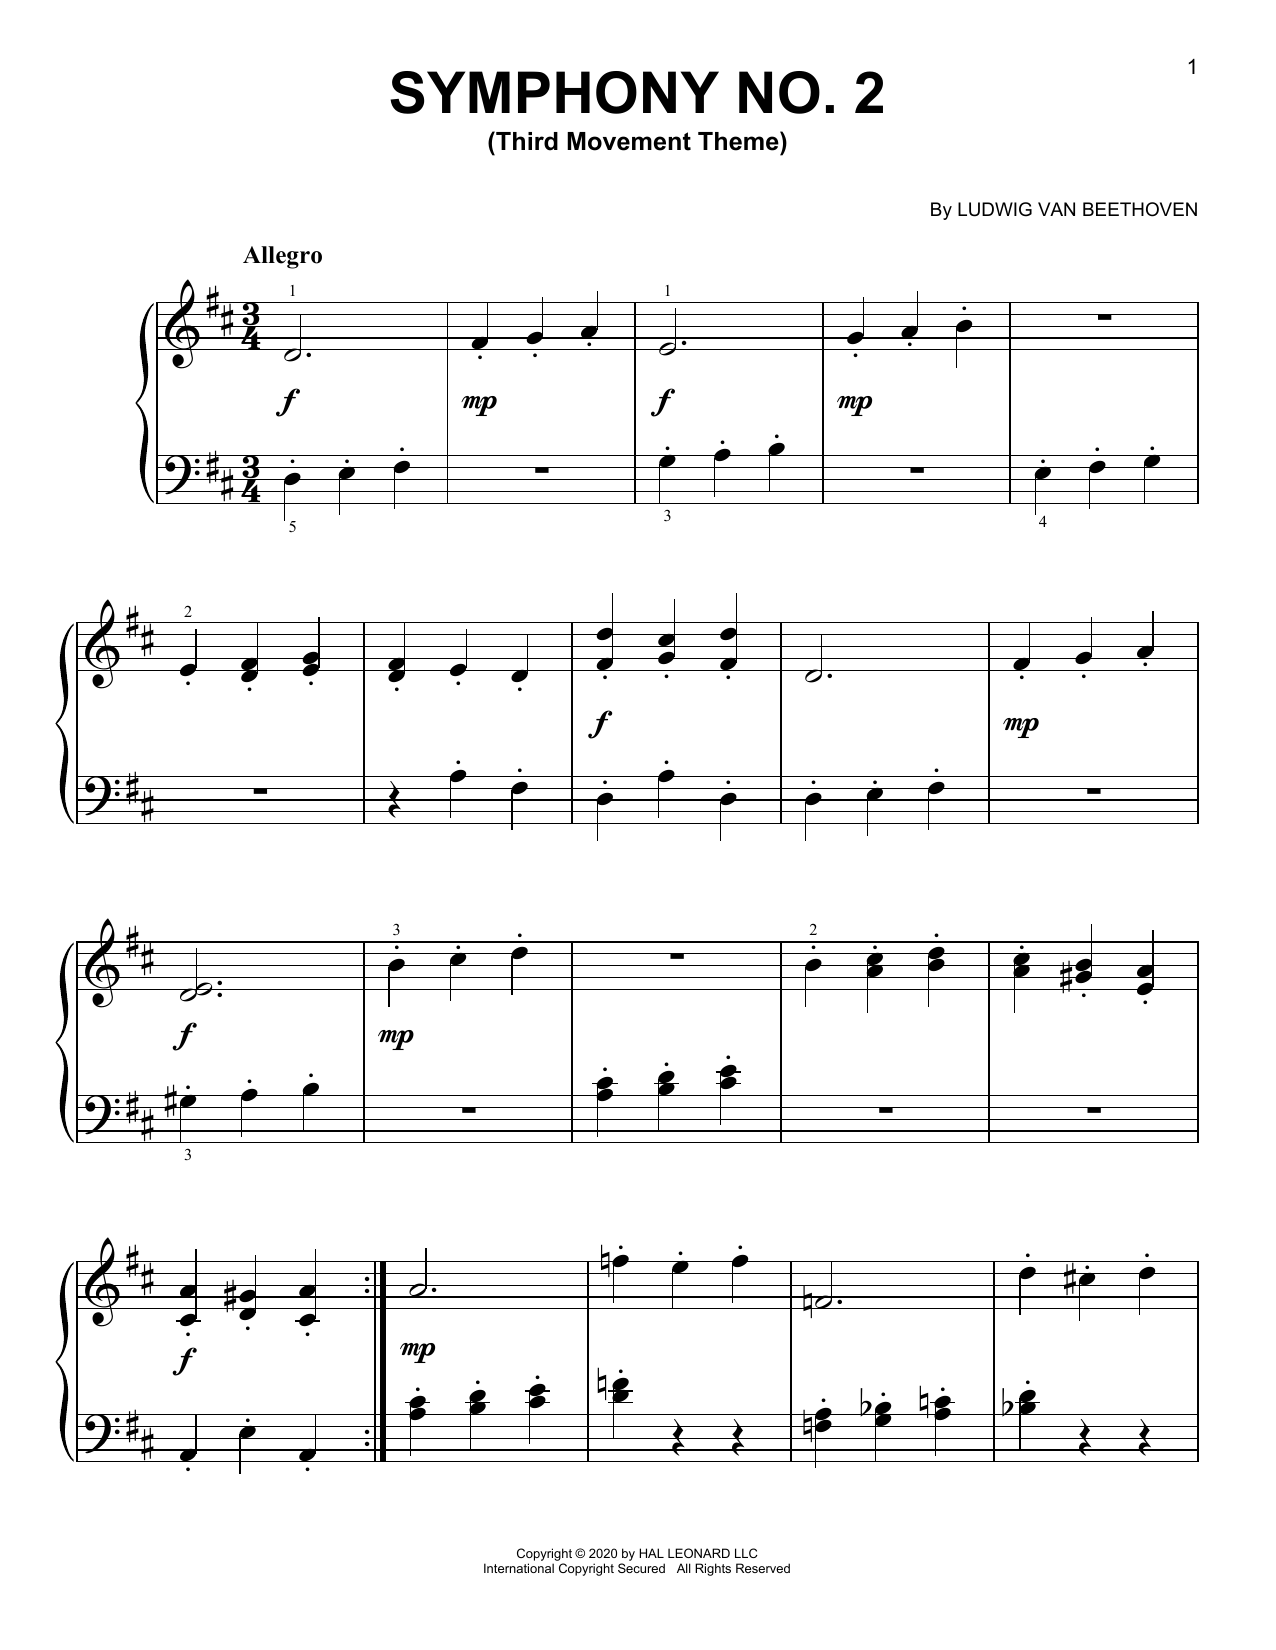 Ludwig van Beethoven Symphony No. 2, Third Movement Excerpt sheet music notes printable PDF score